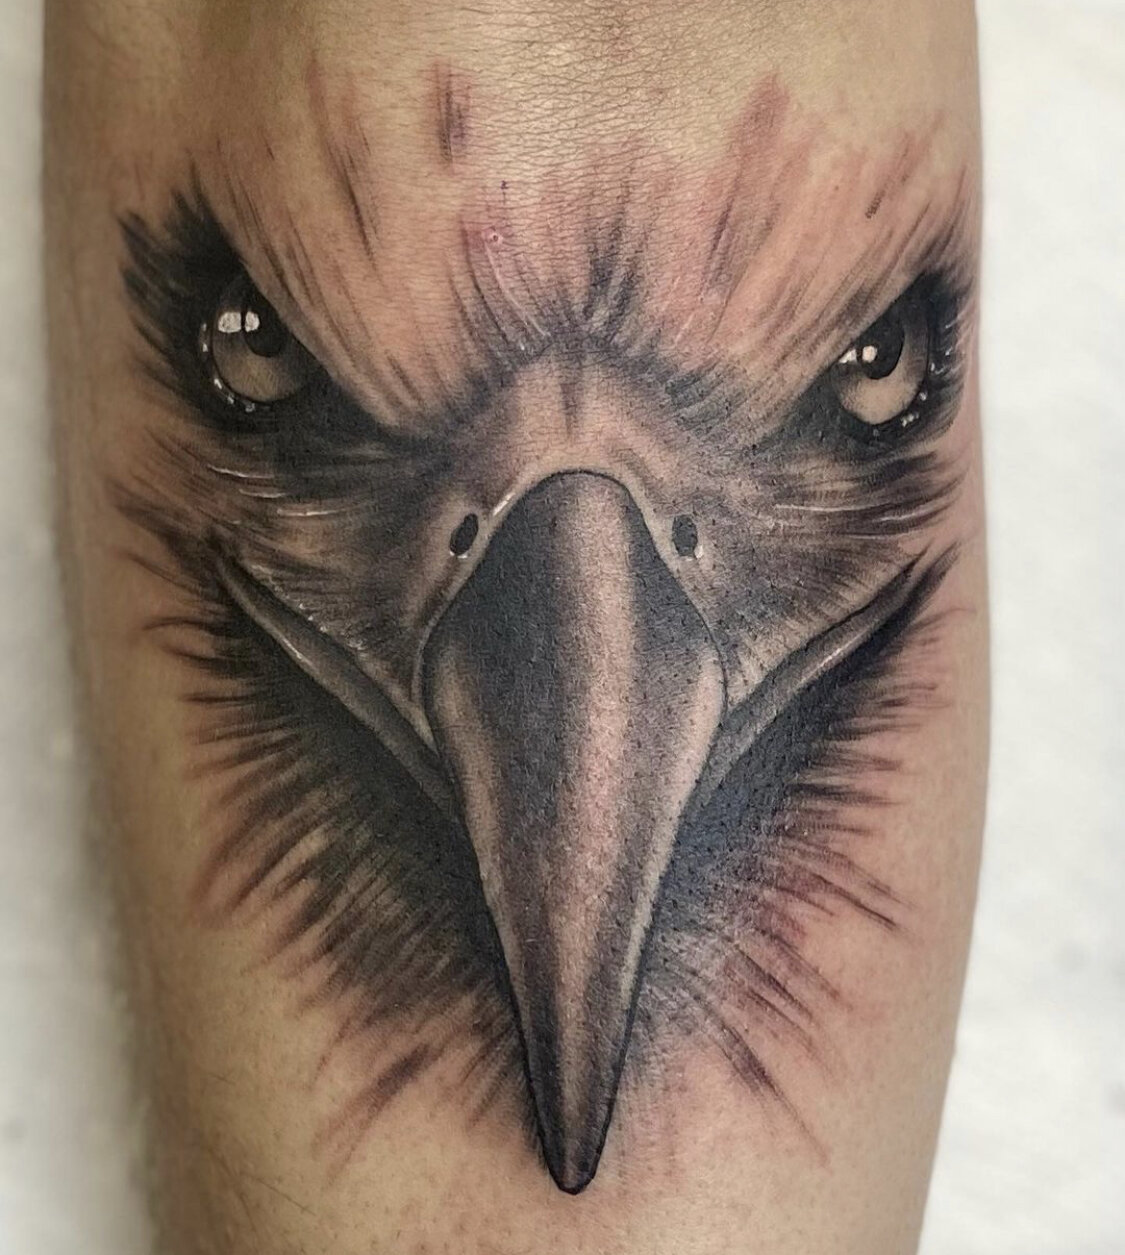 tattooed · # tattoos #handtattoo... - Eagle Eye Tattoo's | Facebook